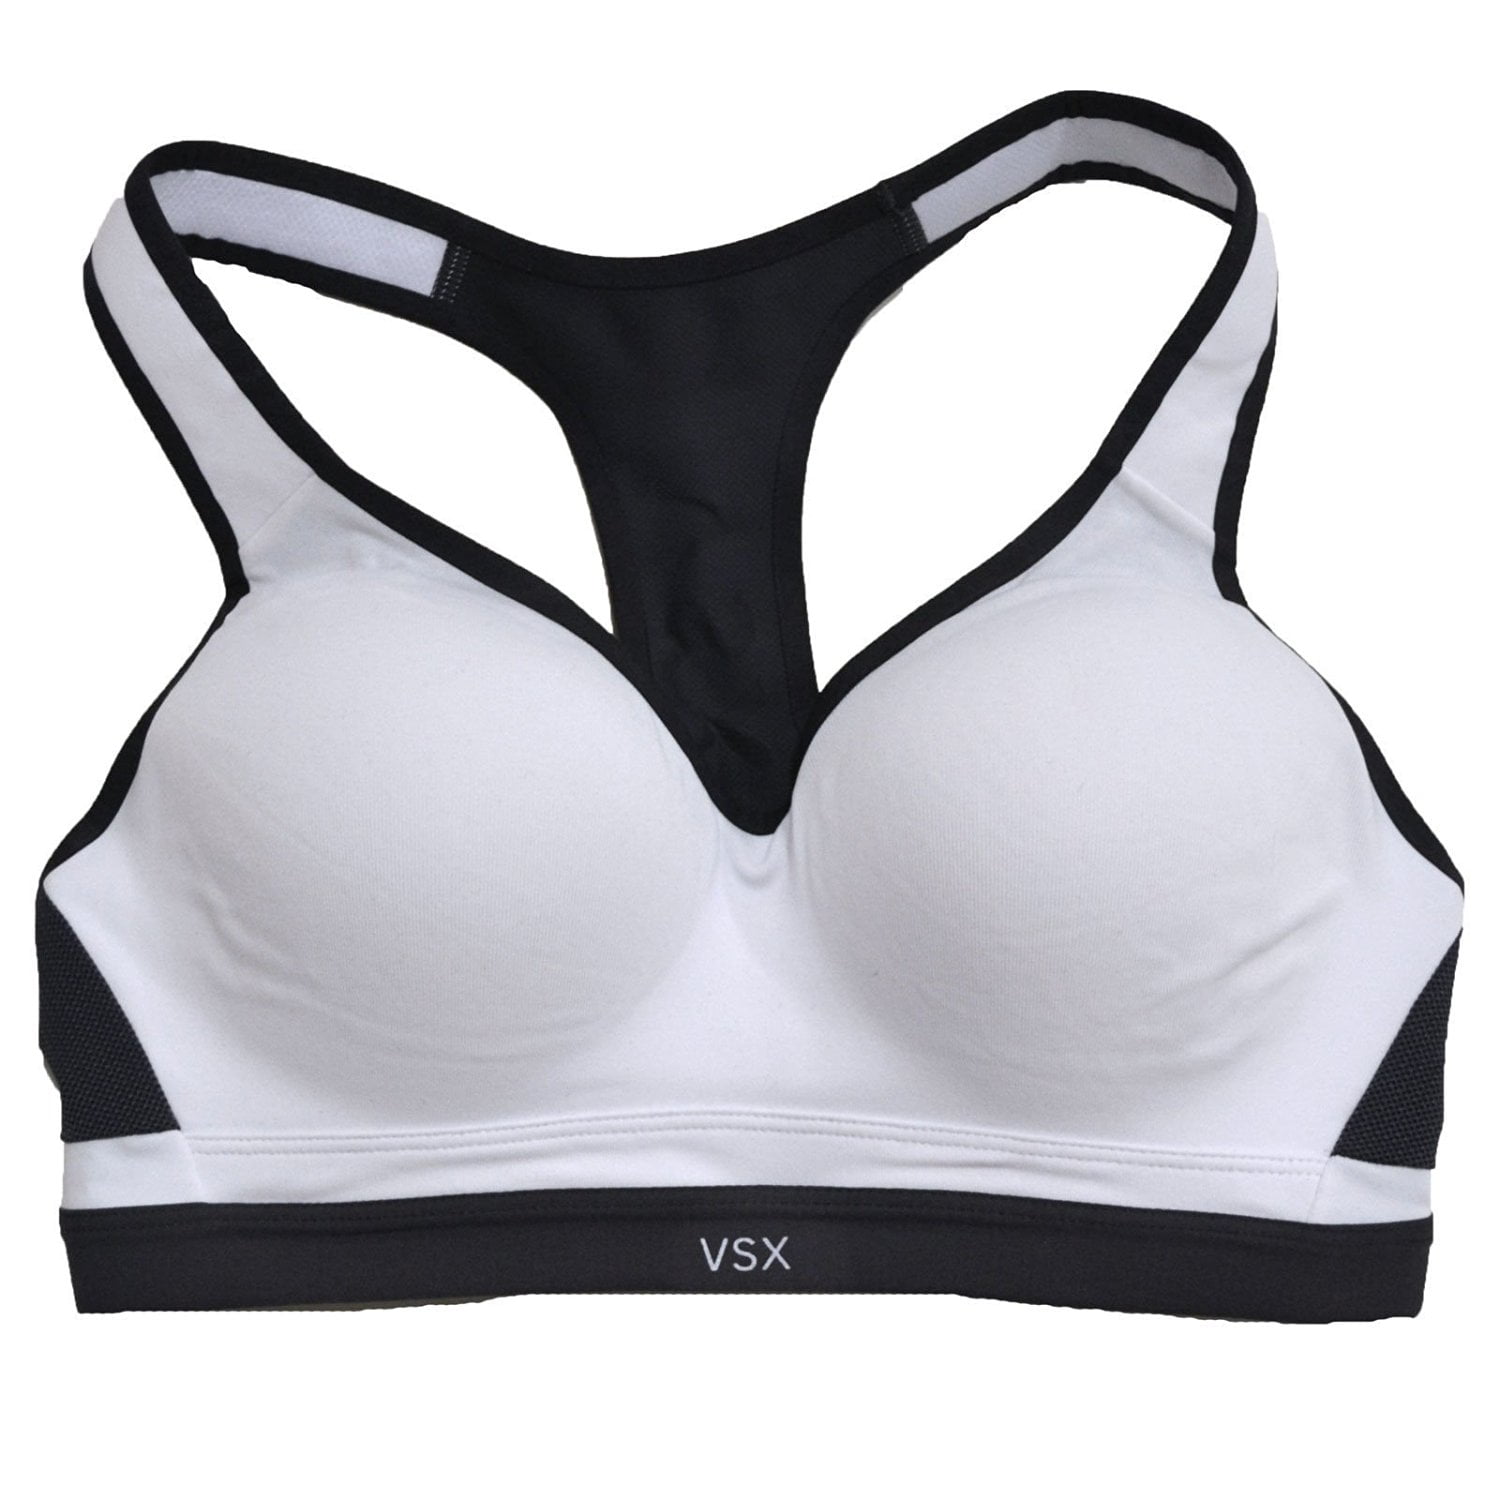 Victoria Secret VSX Sports Bra, Size Medium YOU PICK: black/white OR  black/pink 